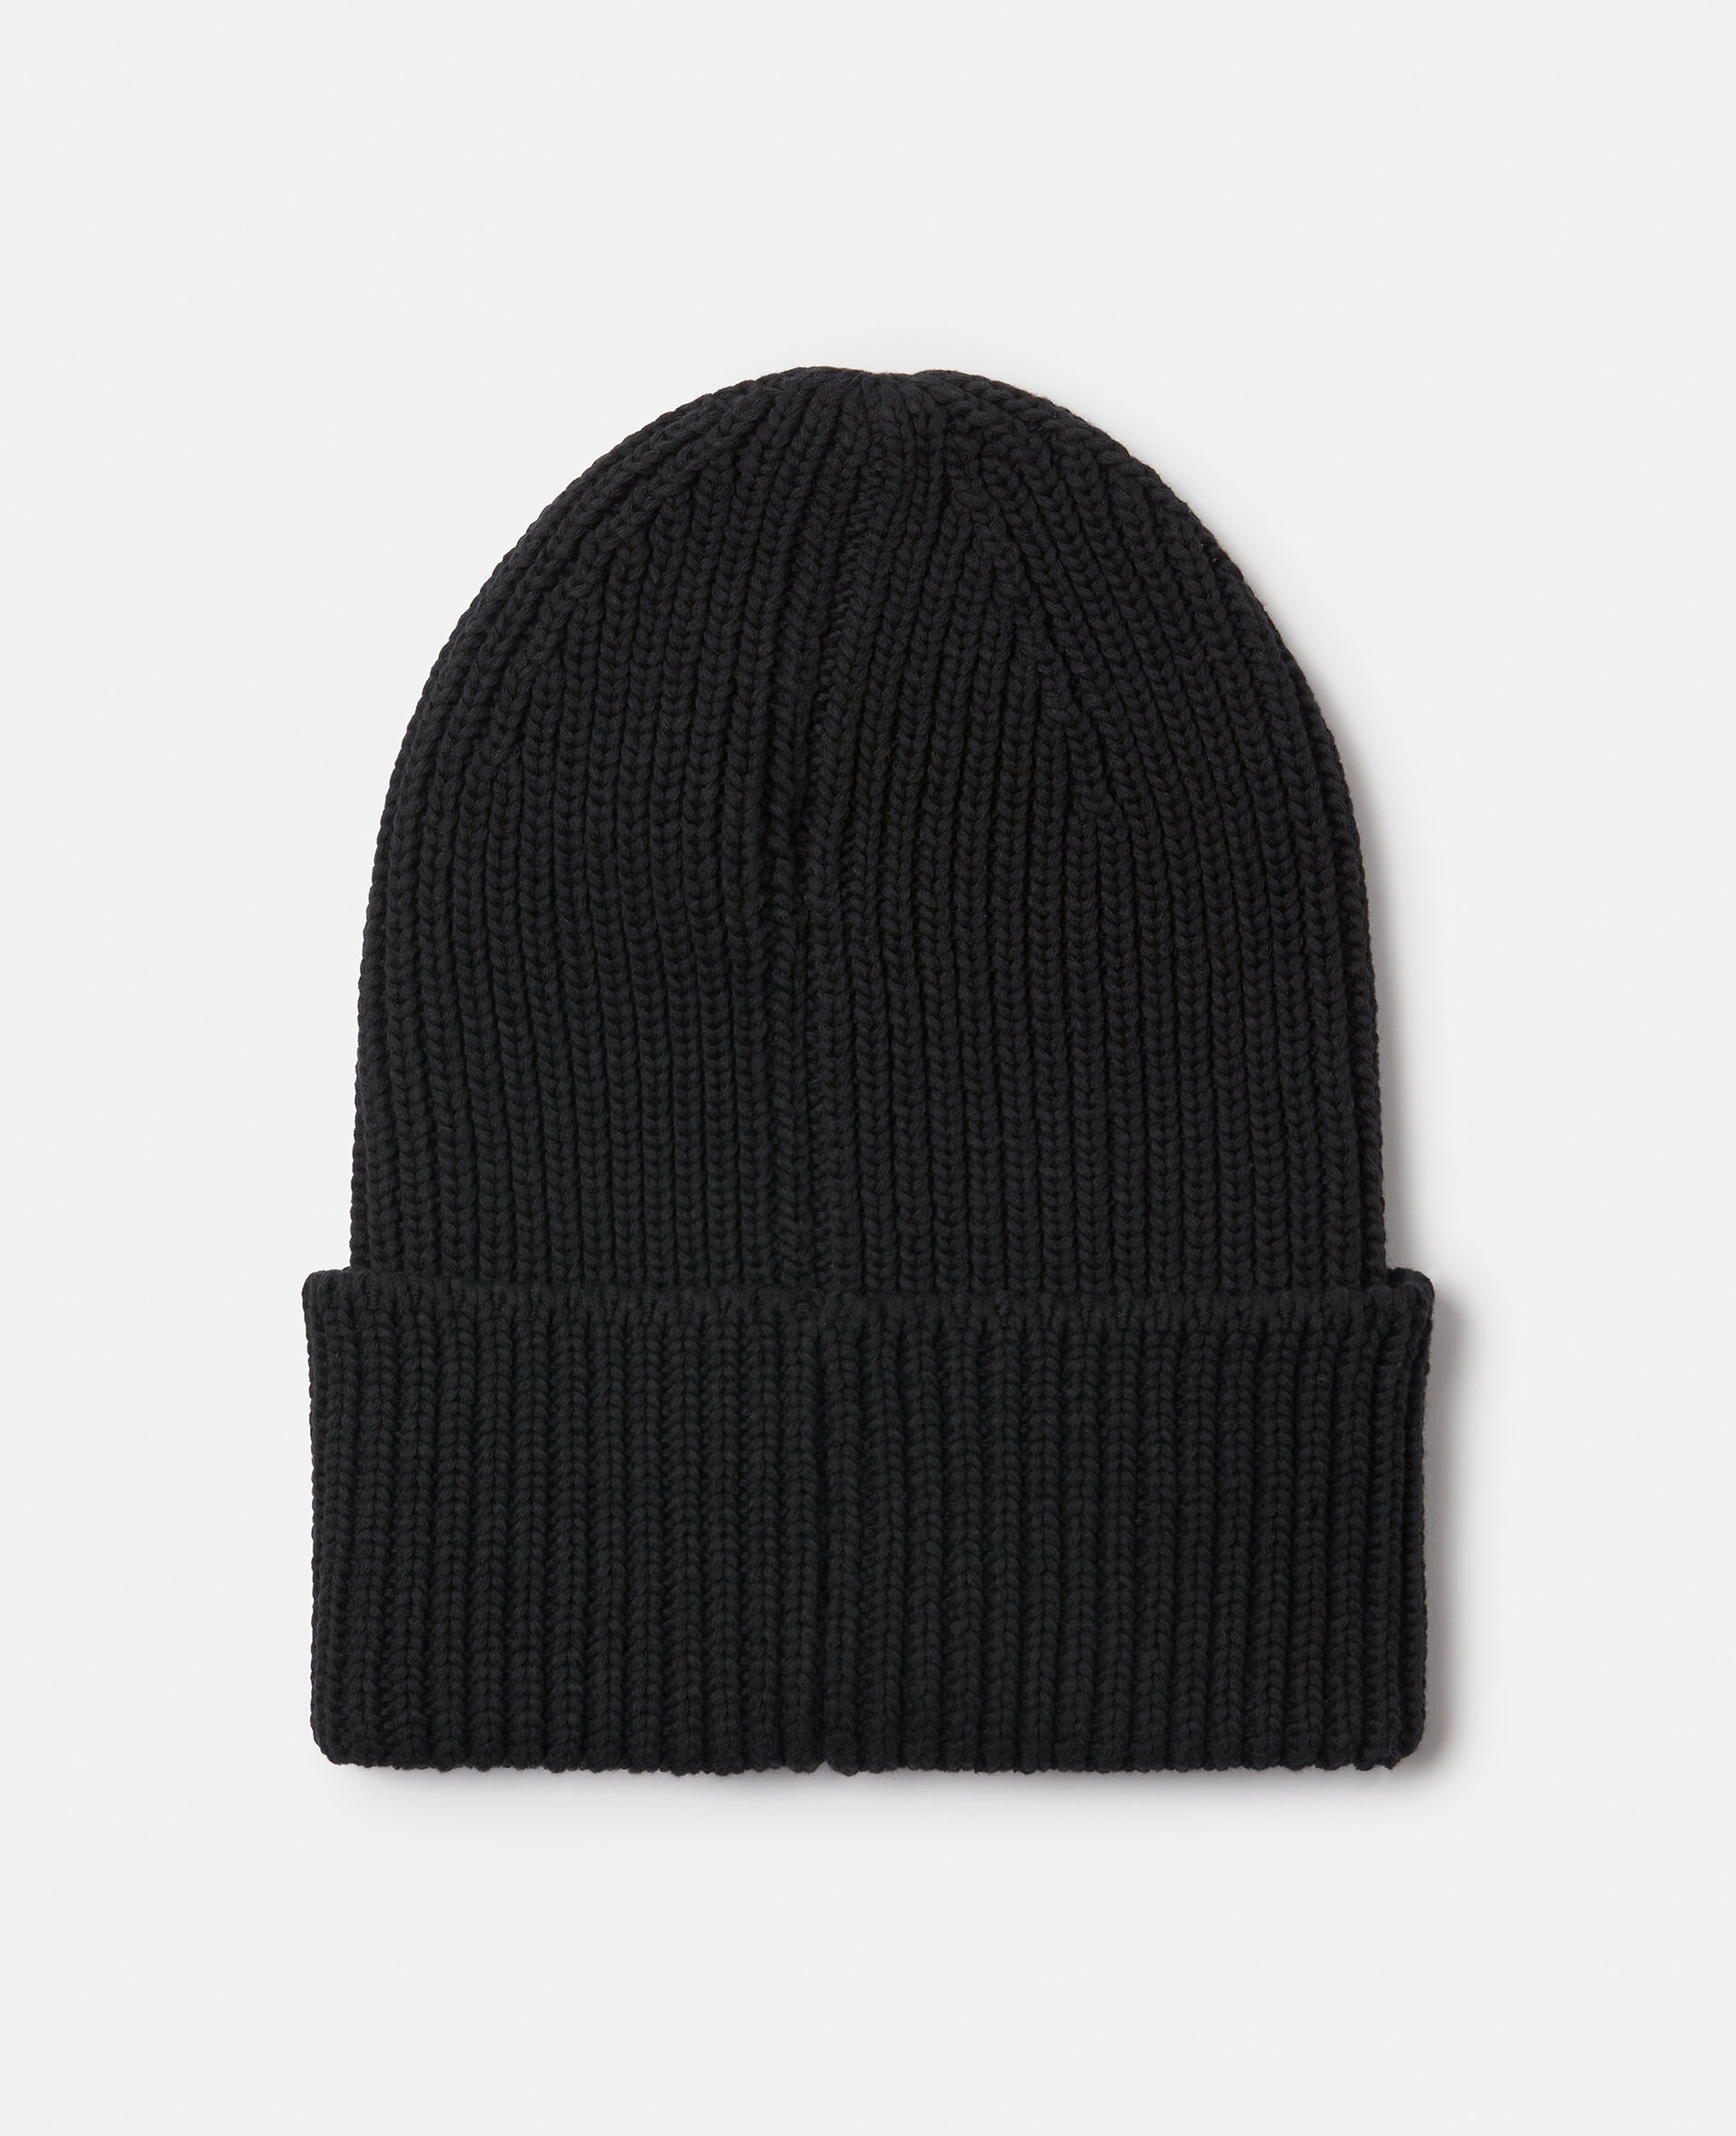 Beanie Hat-Black-large image number 1